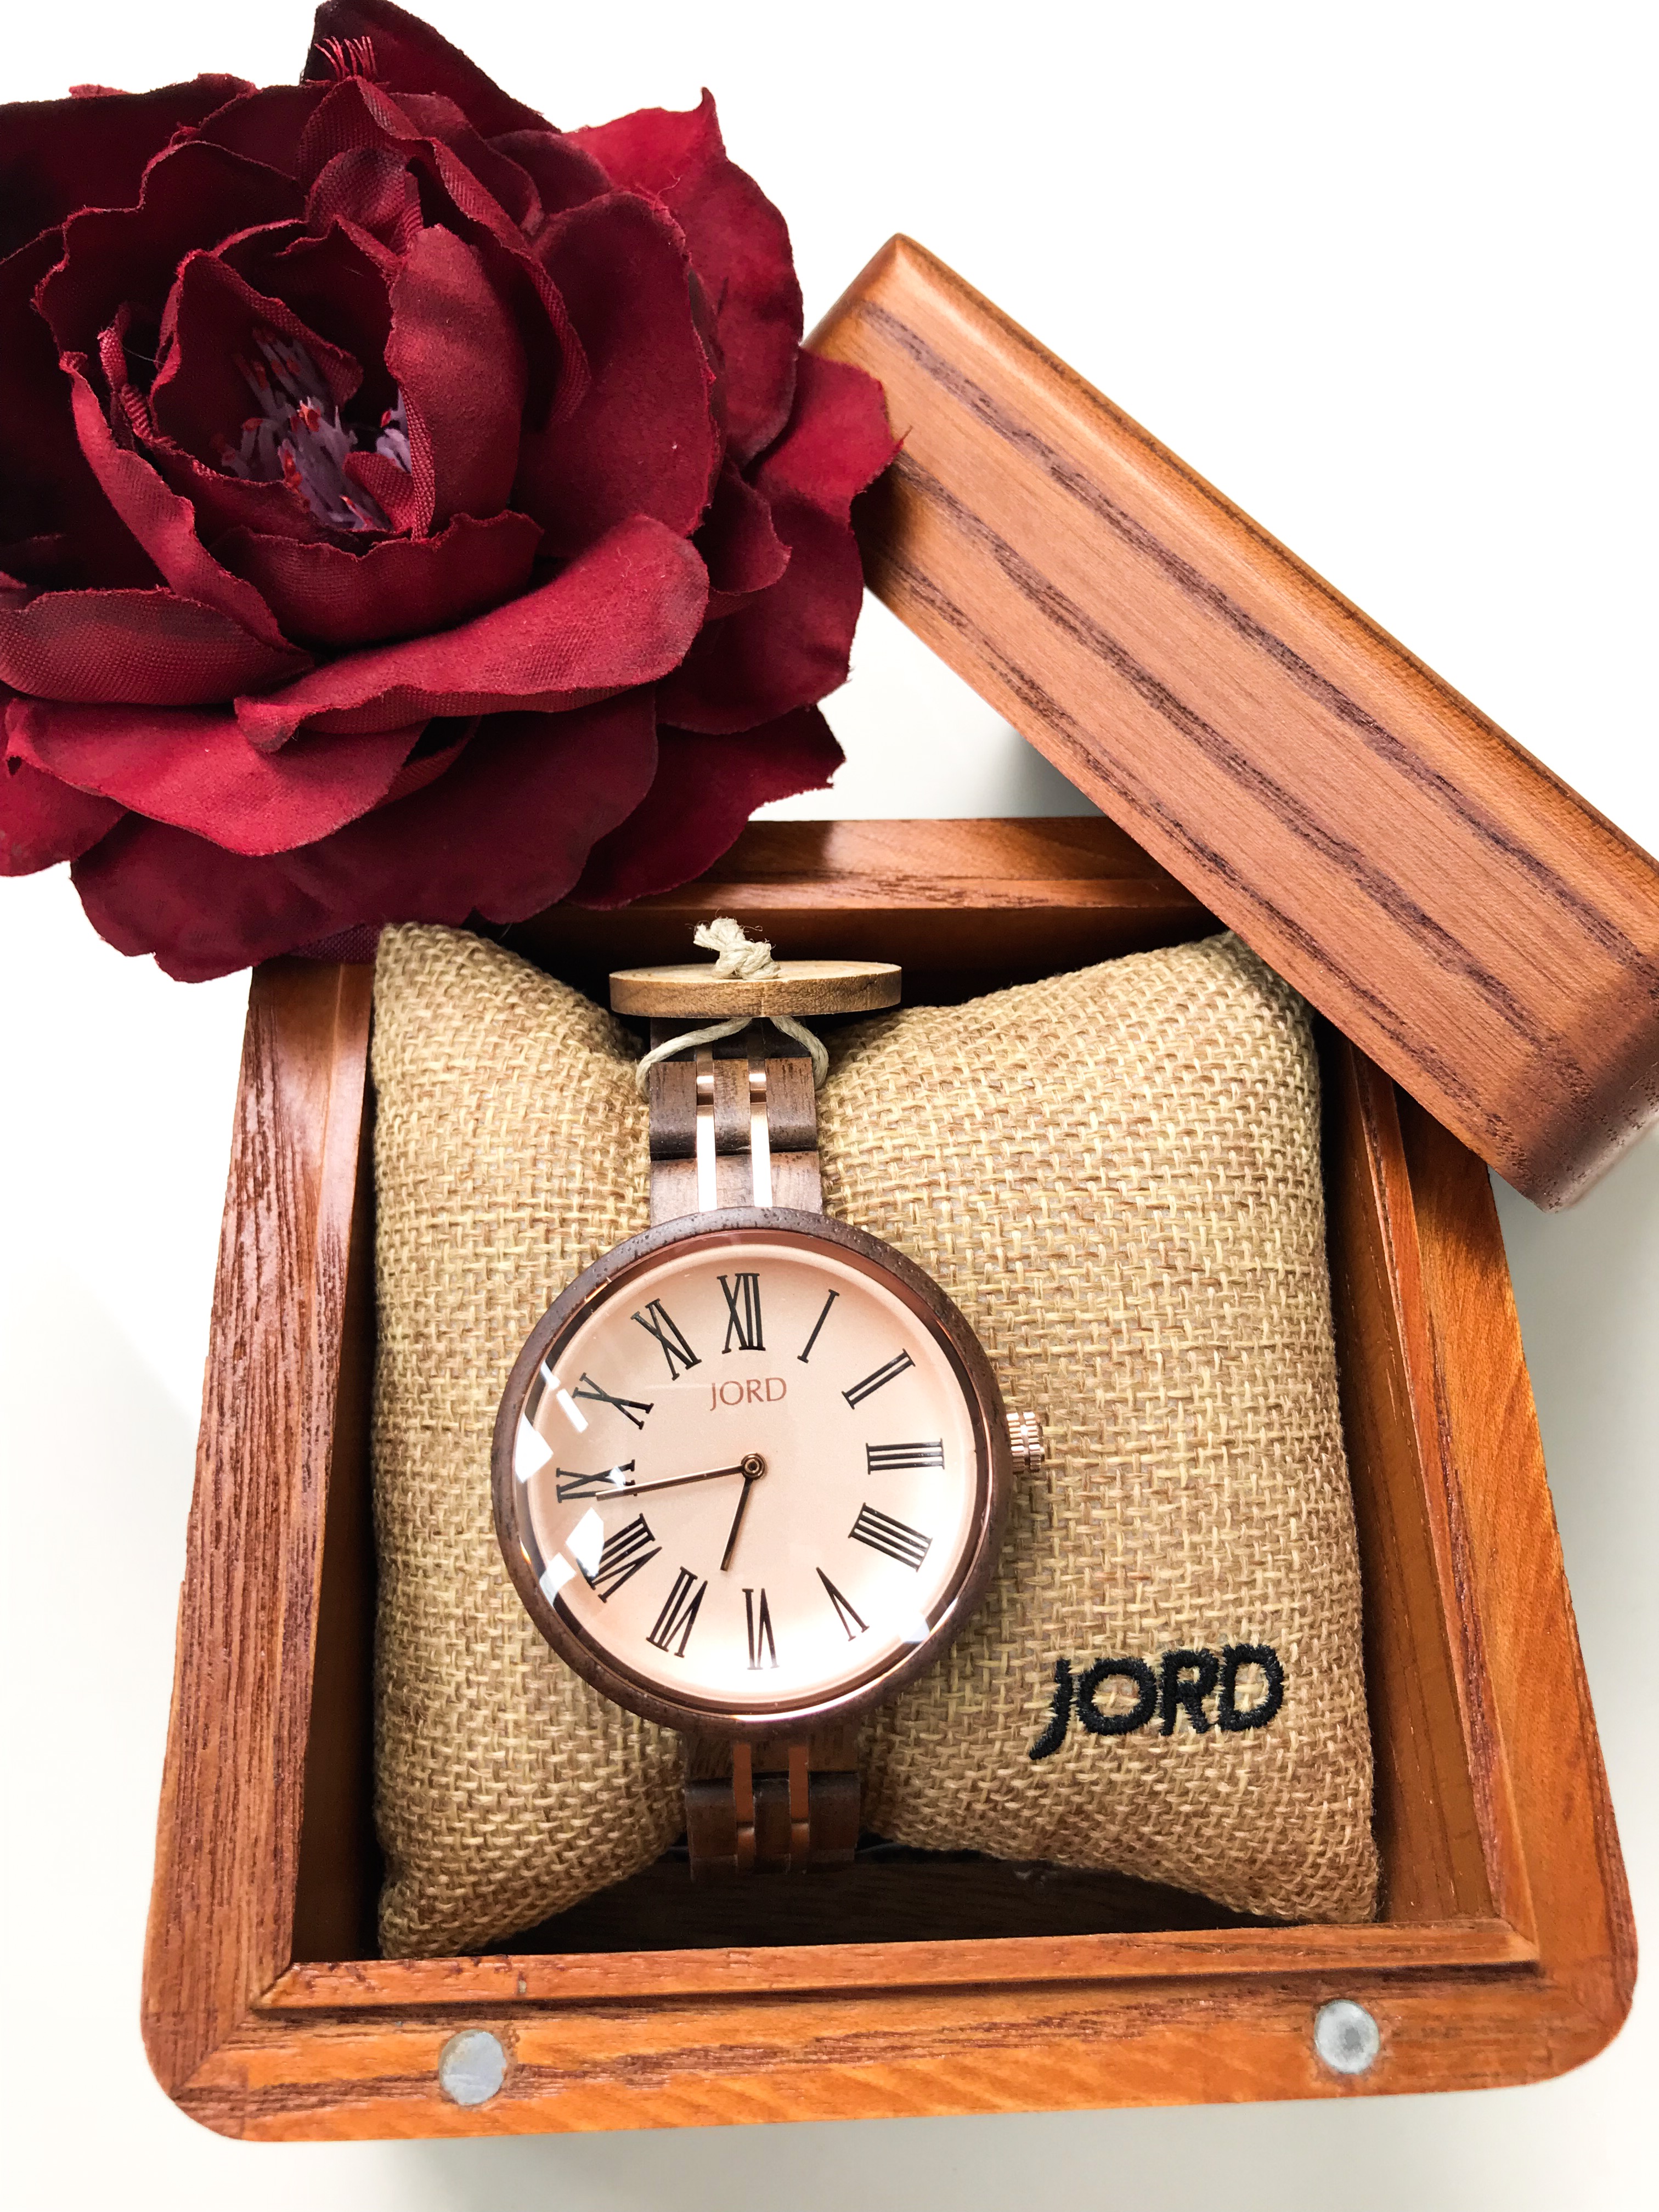 Jord watch | Engraved watch for Valentine’s Day | Unique women’s watch Unique men’s watch | Personalized watches for him/her Unique men’s/women’s watch for Valentine’s Day